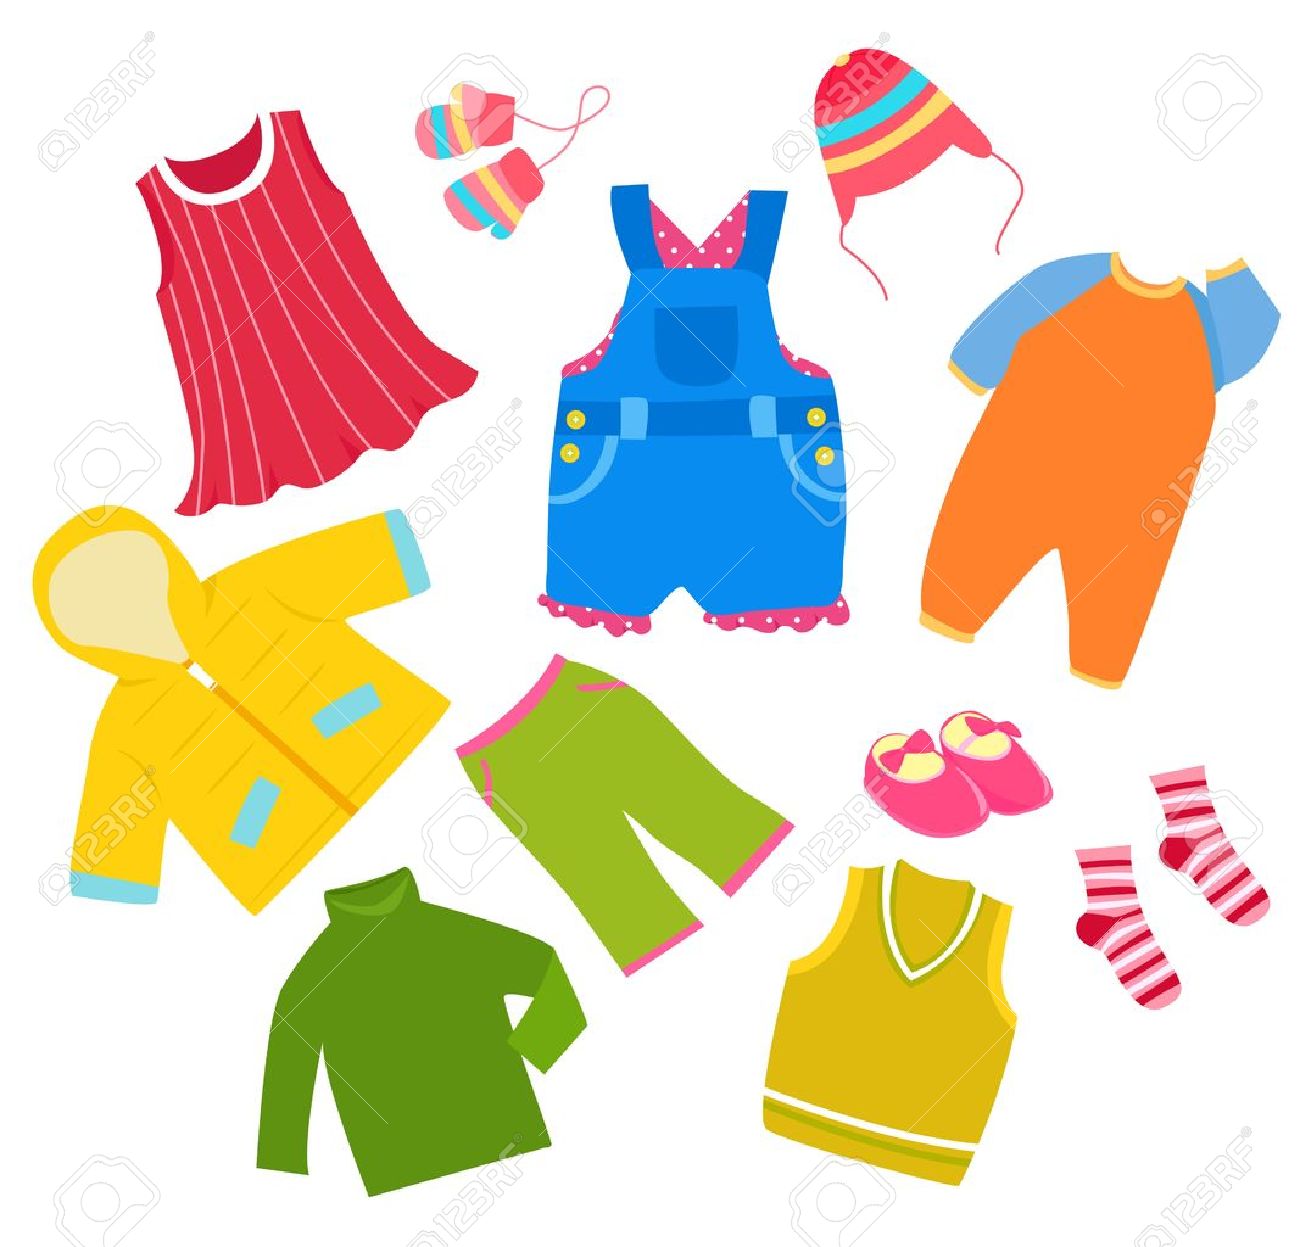 clip art of children's clothes